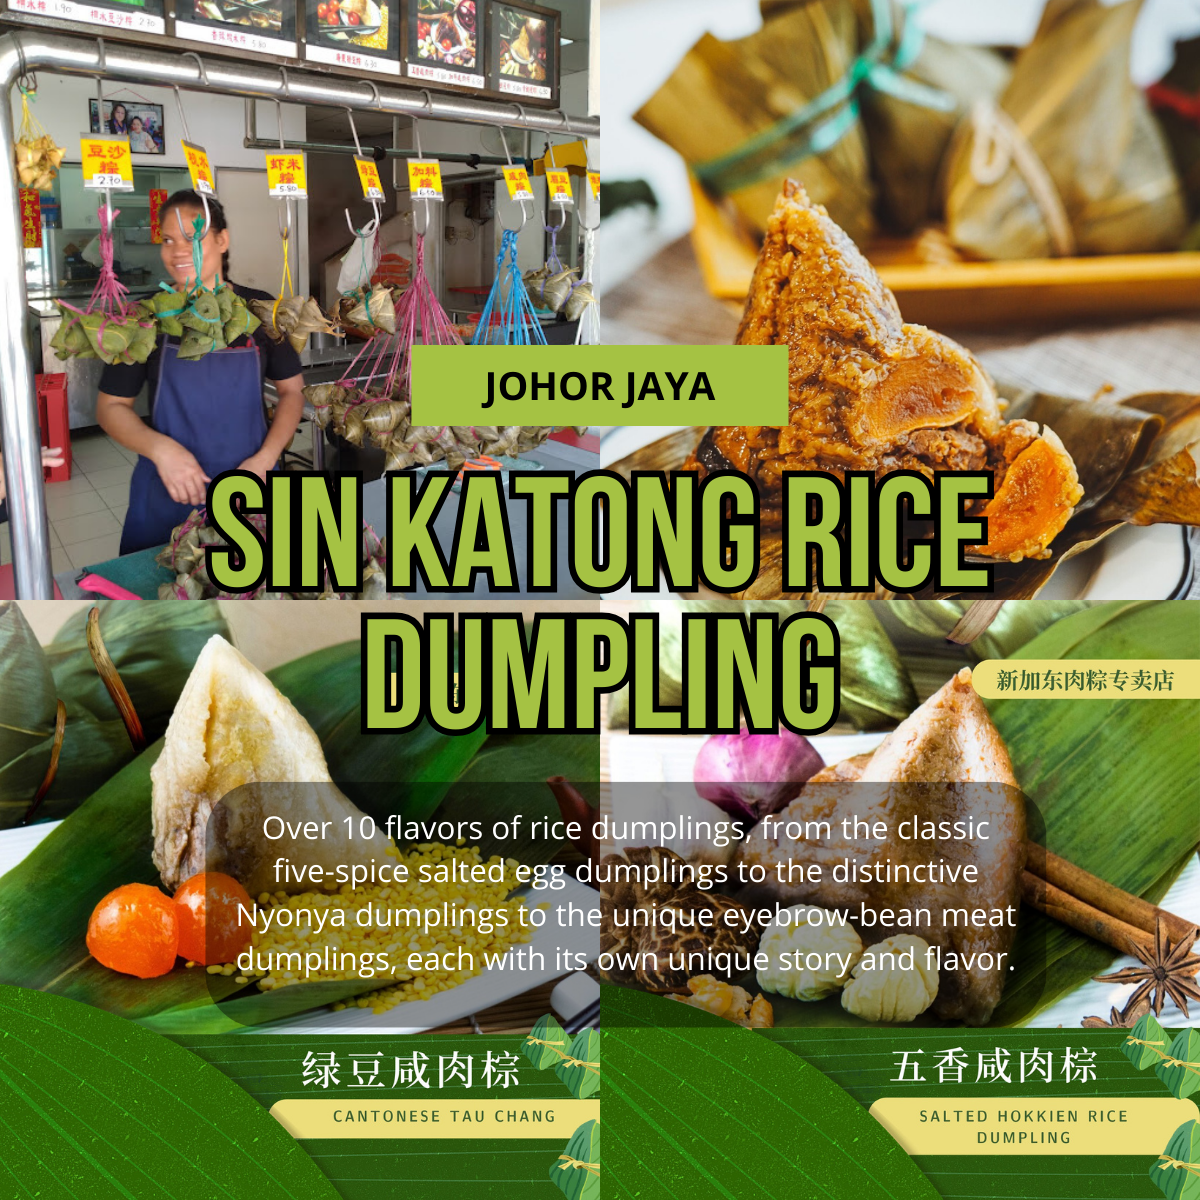 Sin Katong Rice Dumpling Johor Bahru – A Culinary Heritage Unfolded